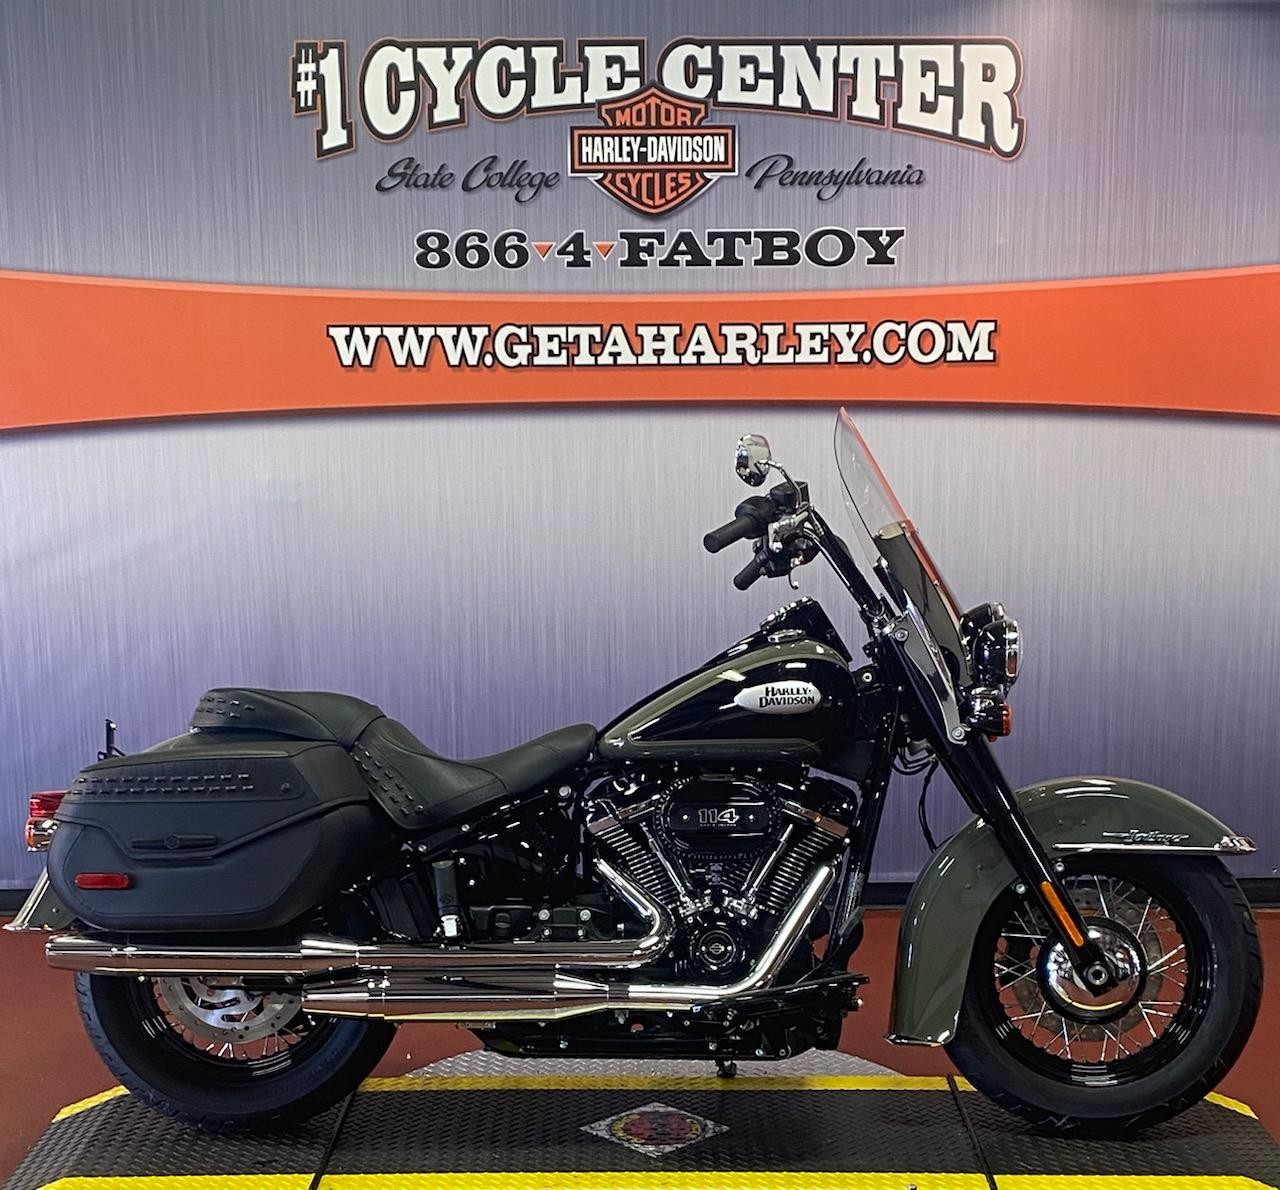 2021 Harley-Davidson Touring FLHCS Heritage Classic 114 at #1 Cycle Center Harley-Davidson